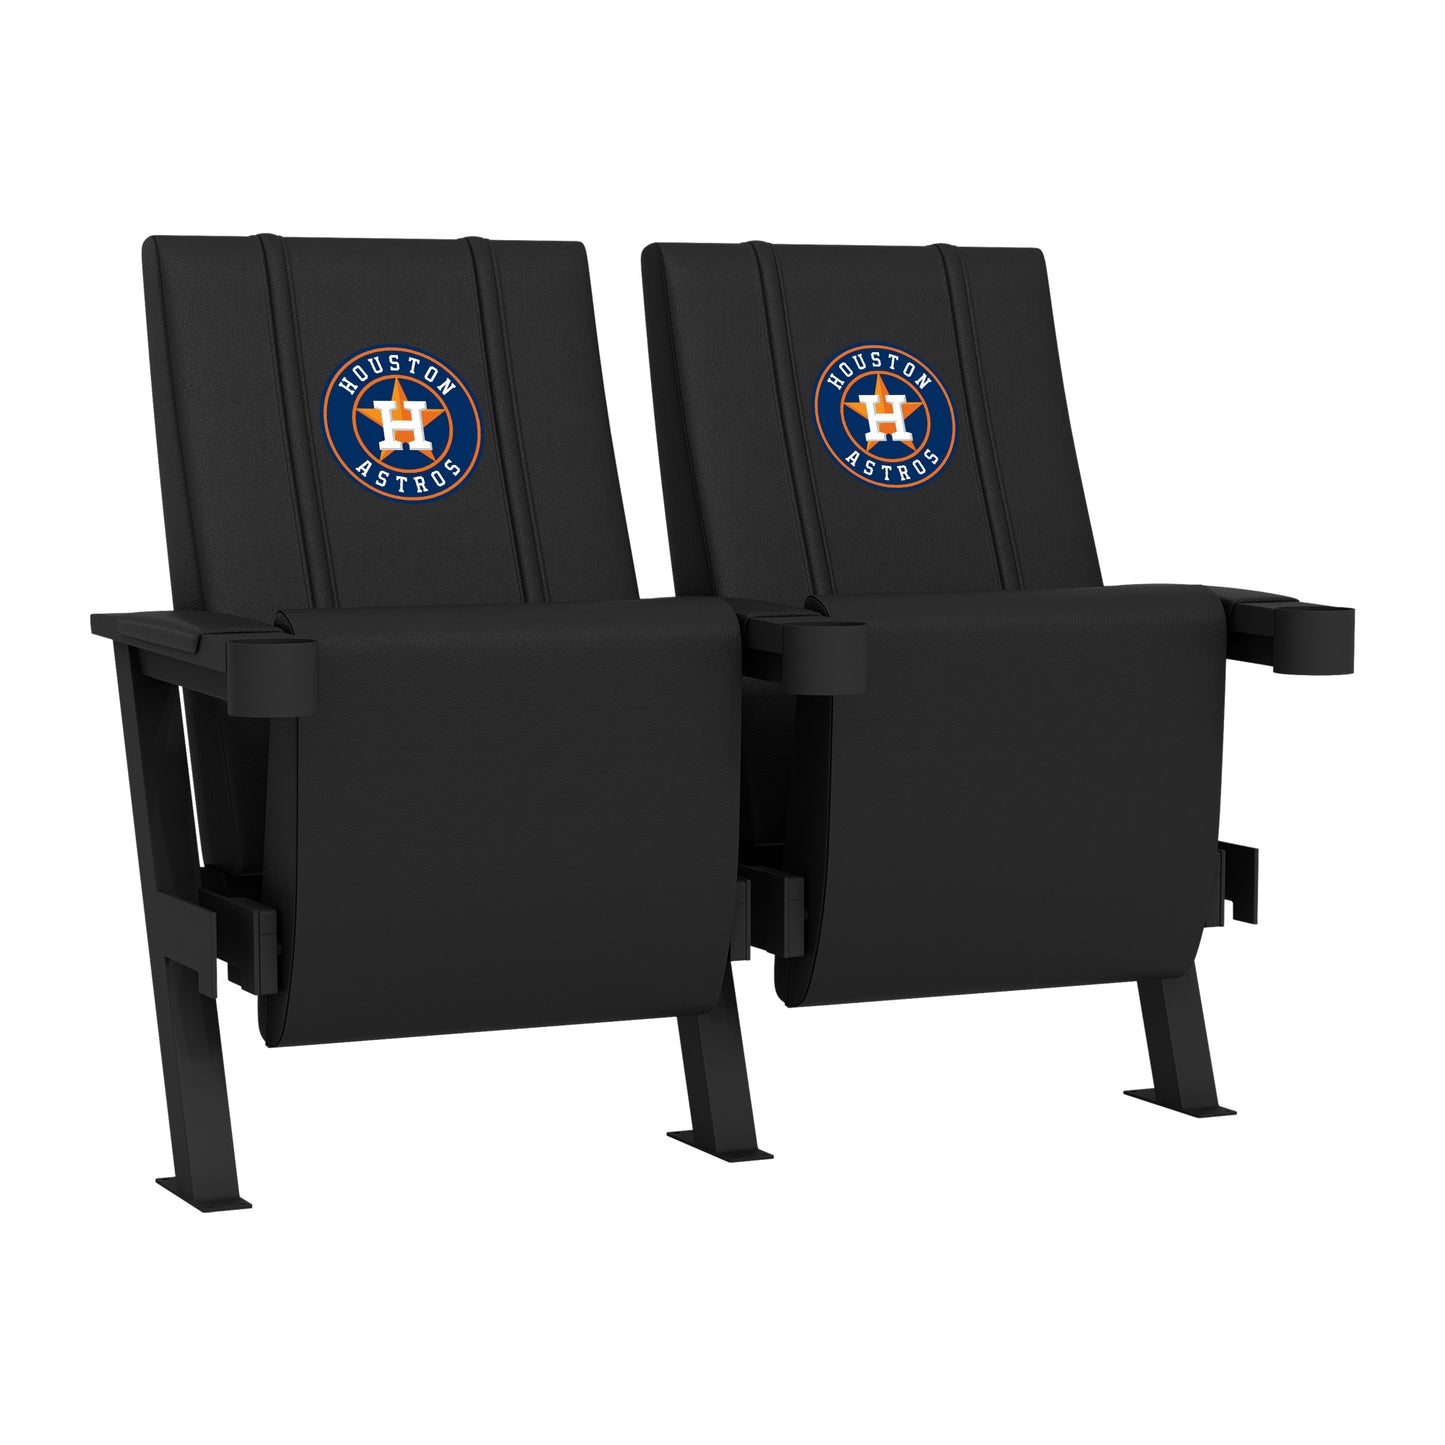 SuiteMax 3.5 VIP Seats with Houston Astros Logo